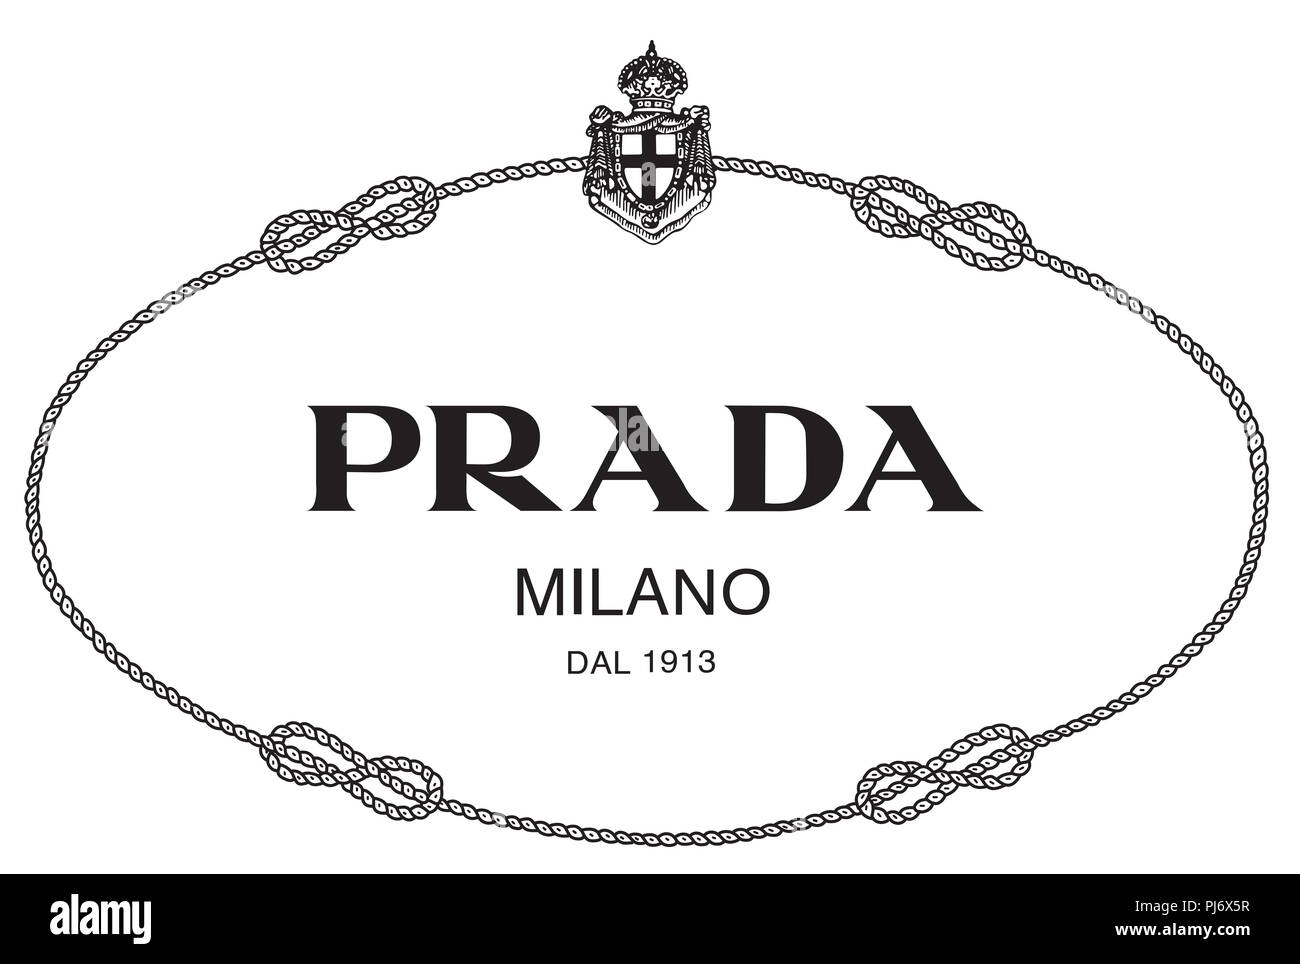 PRADA milano logo fashion luxury brand italy clothes illustration Stock  Photo - Alamy